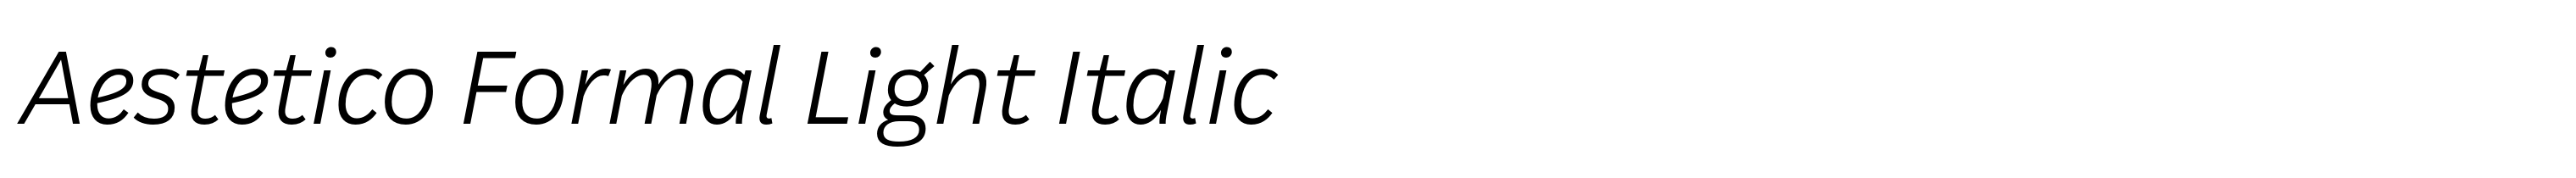 Aestetico Formal Light Italic